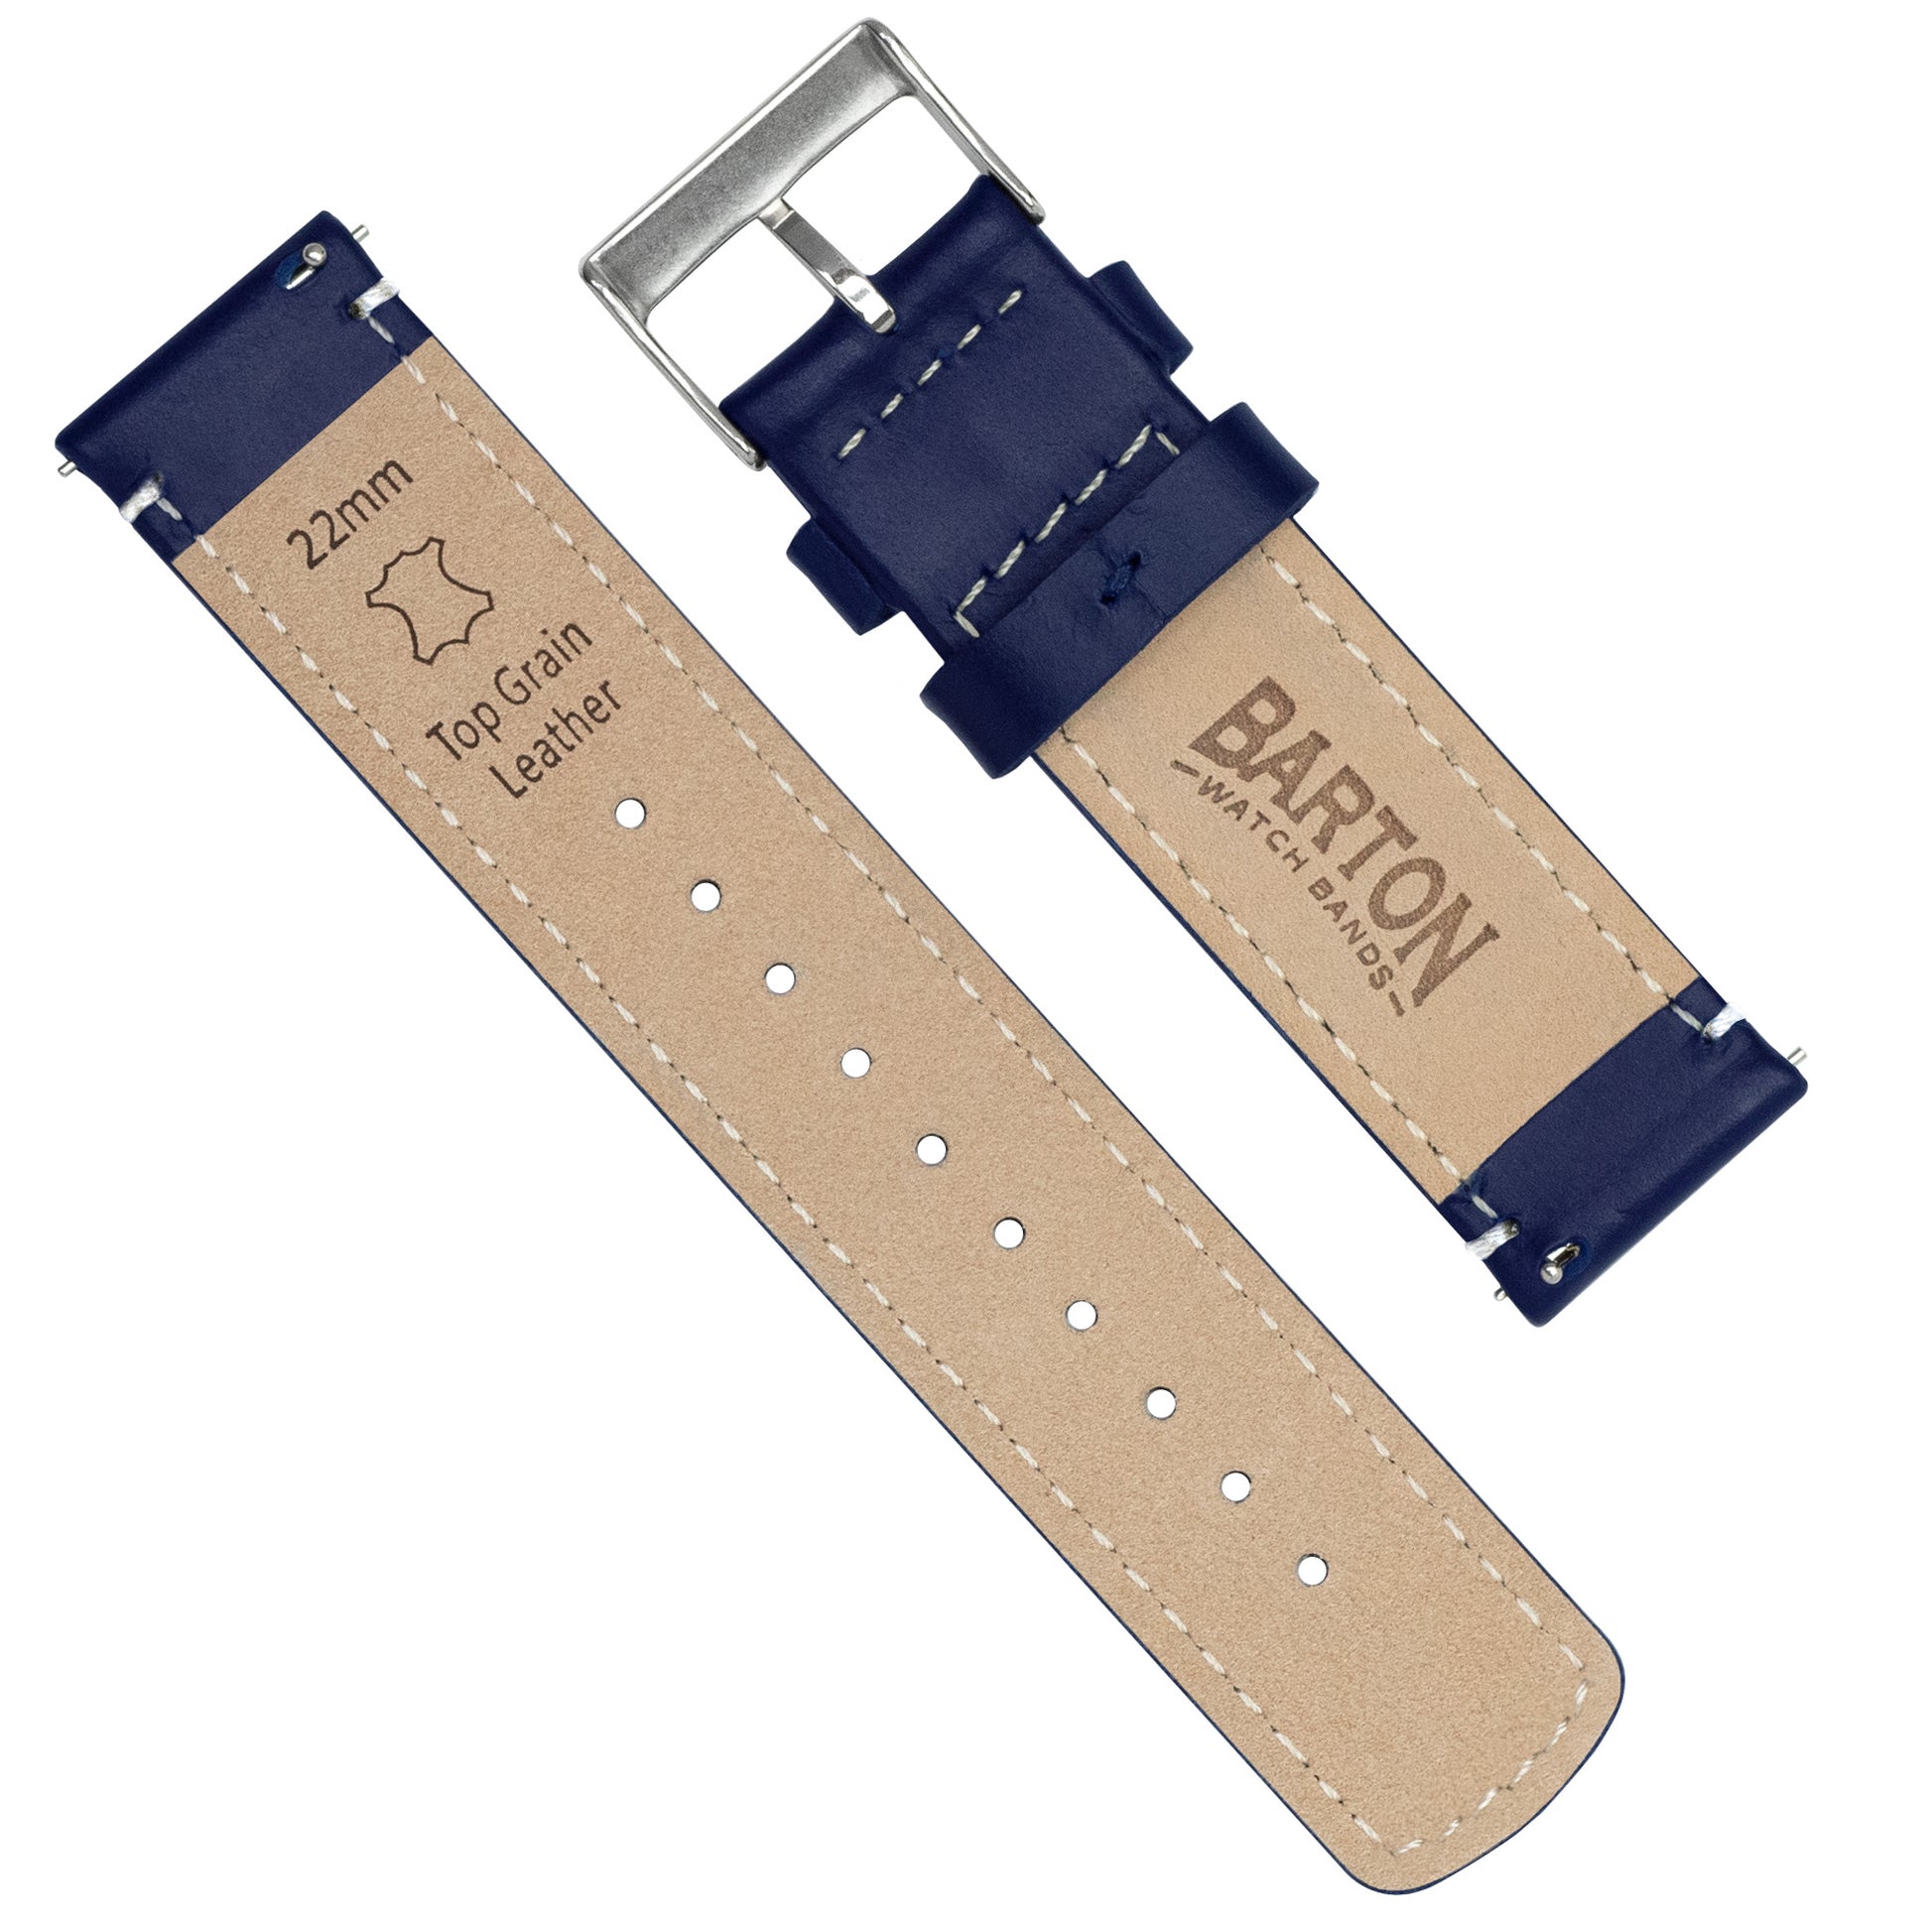 Samsung Galaxy Watch | Navy Blue Leather & White Stitching - Barton Watch Bands